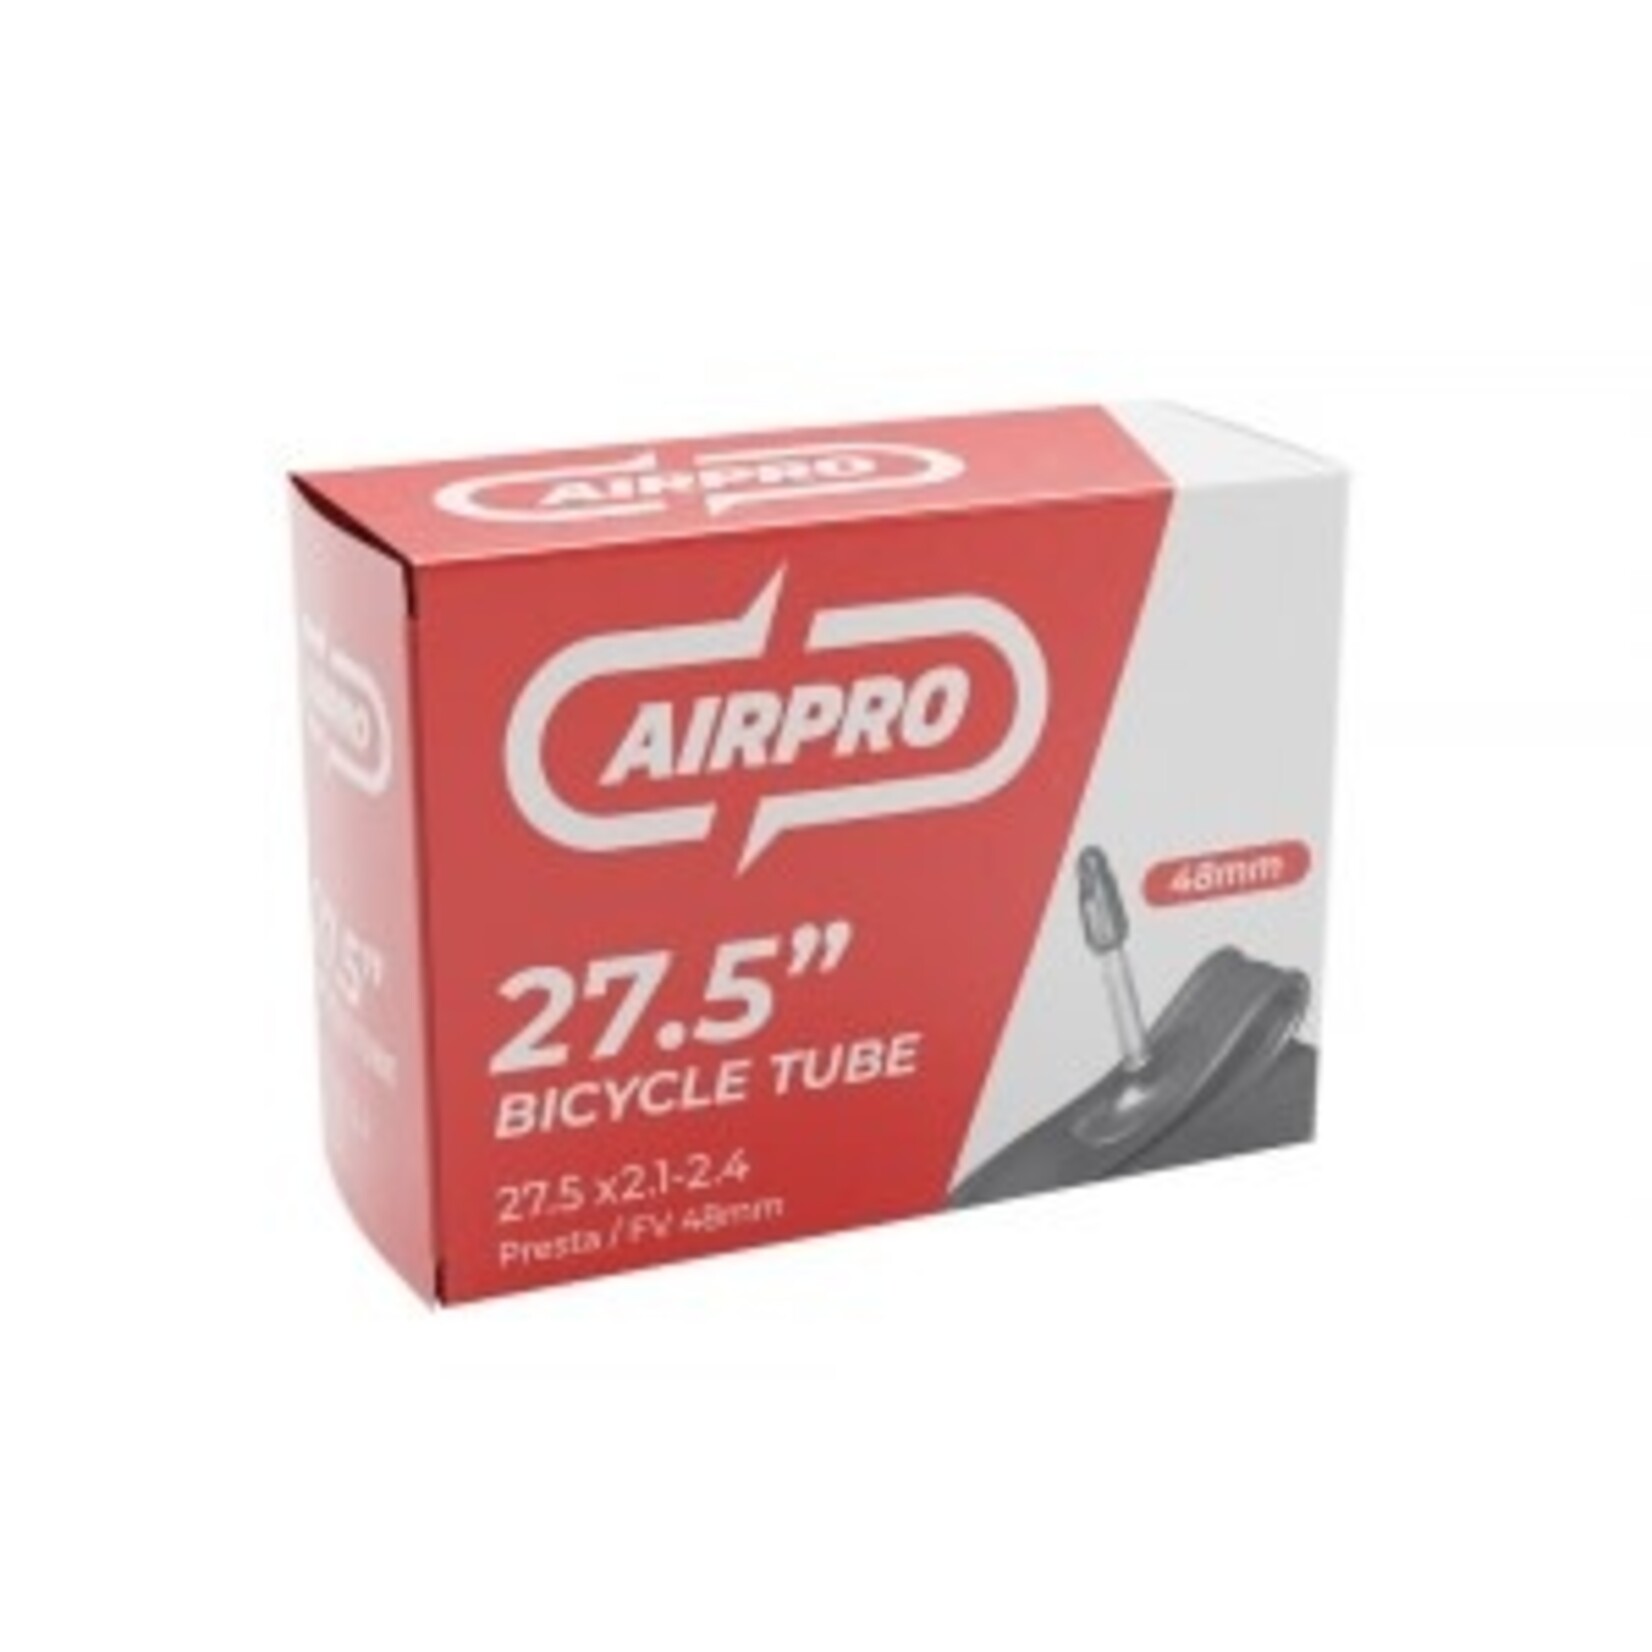 Airpro AIRPRO 27.5 x 2.1 - 2.4 P/V